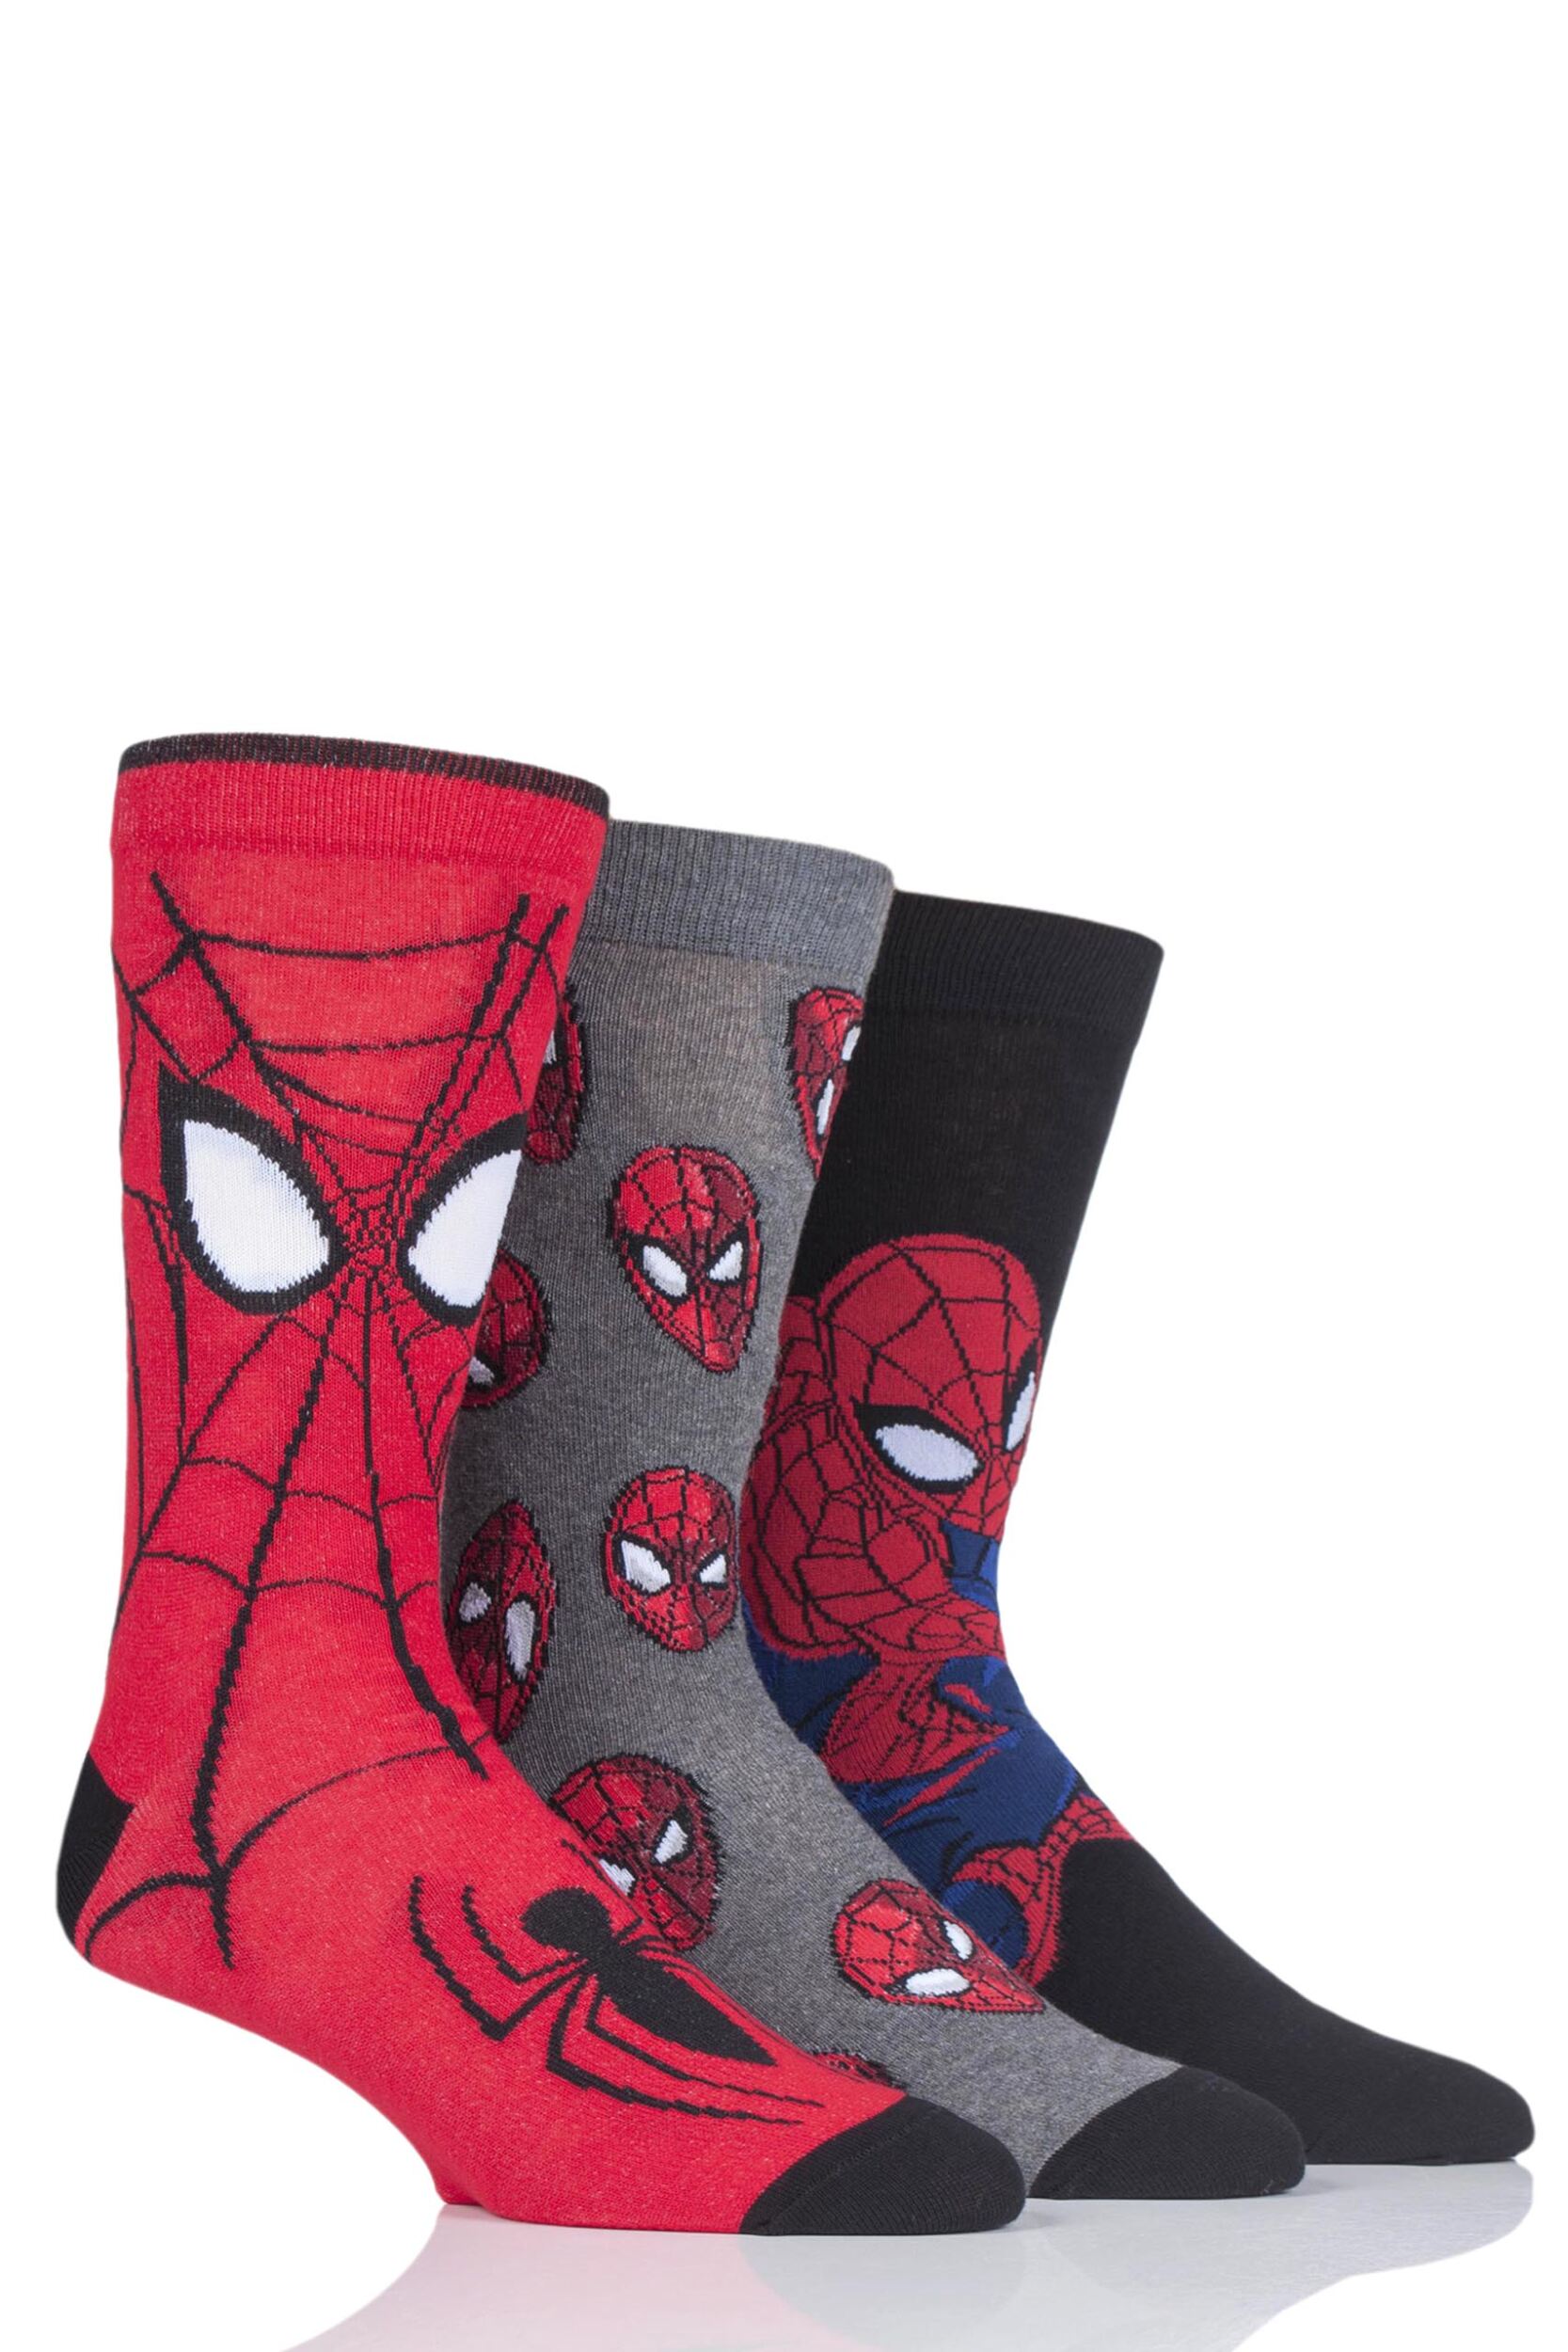 3 Pair Assorted Marvel Spider-Man Cotton Socks Unisex 12-14 Mens - Film & TV Characters